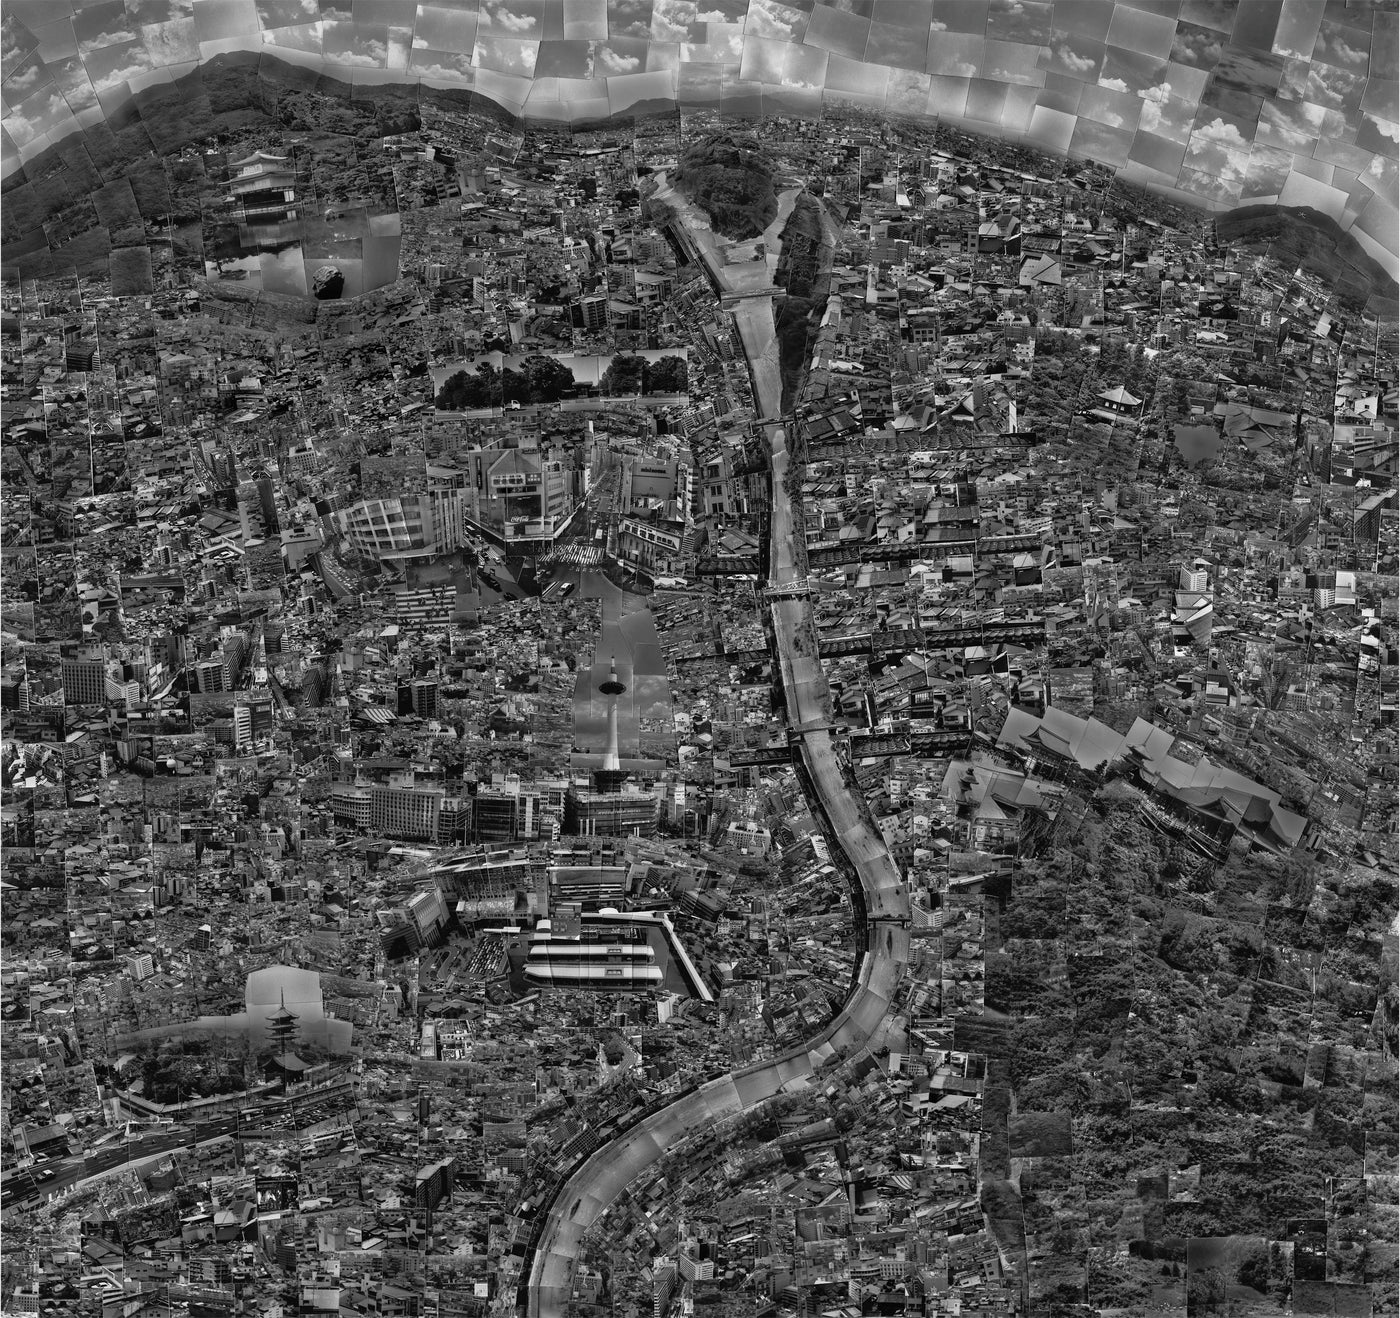 The kaleidoscopic cityscape maps of Sohei Nishino